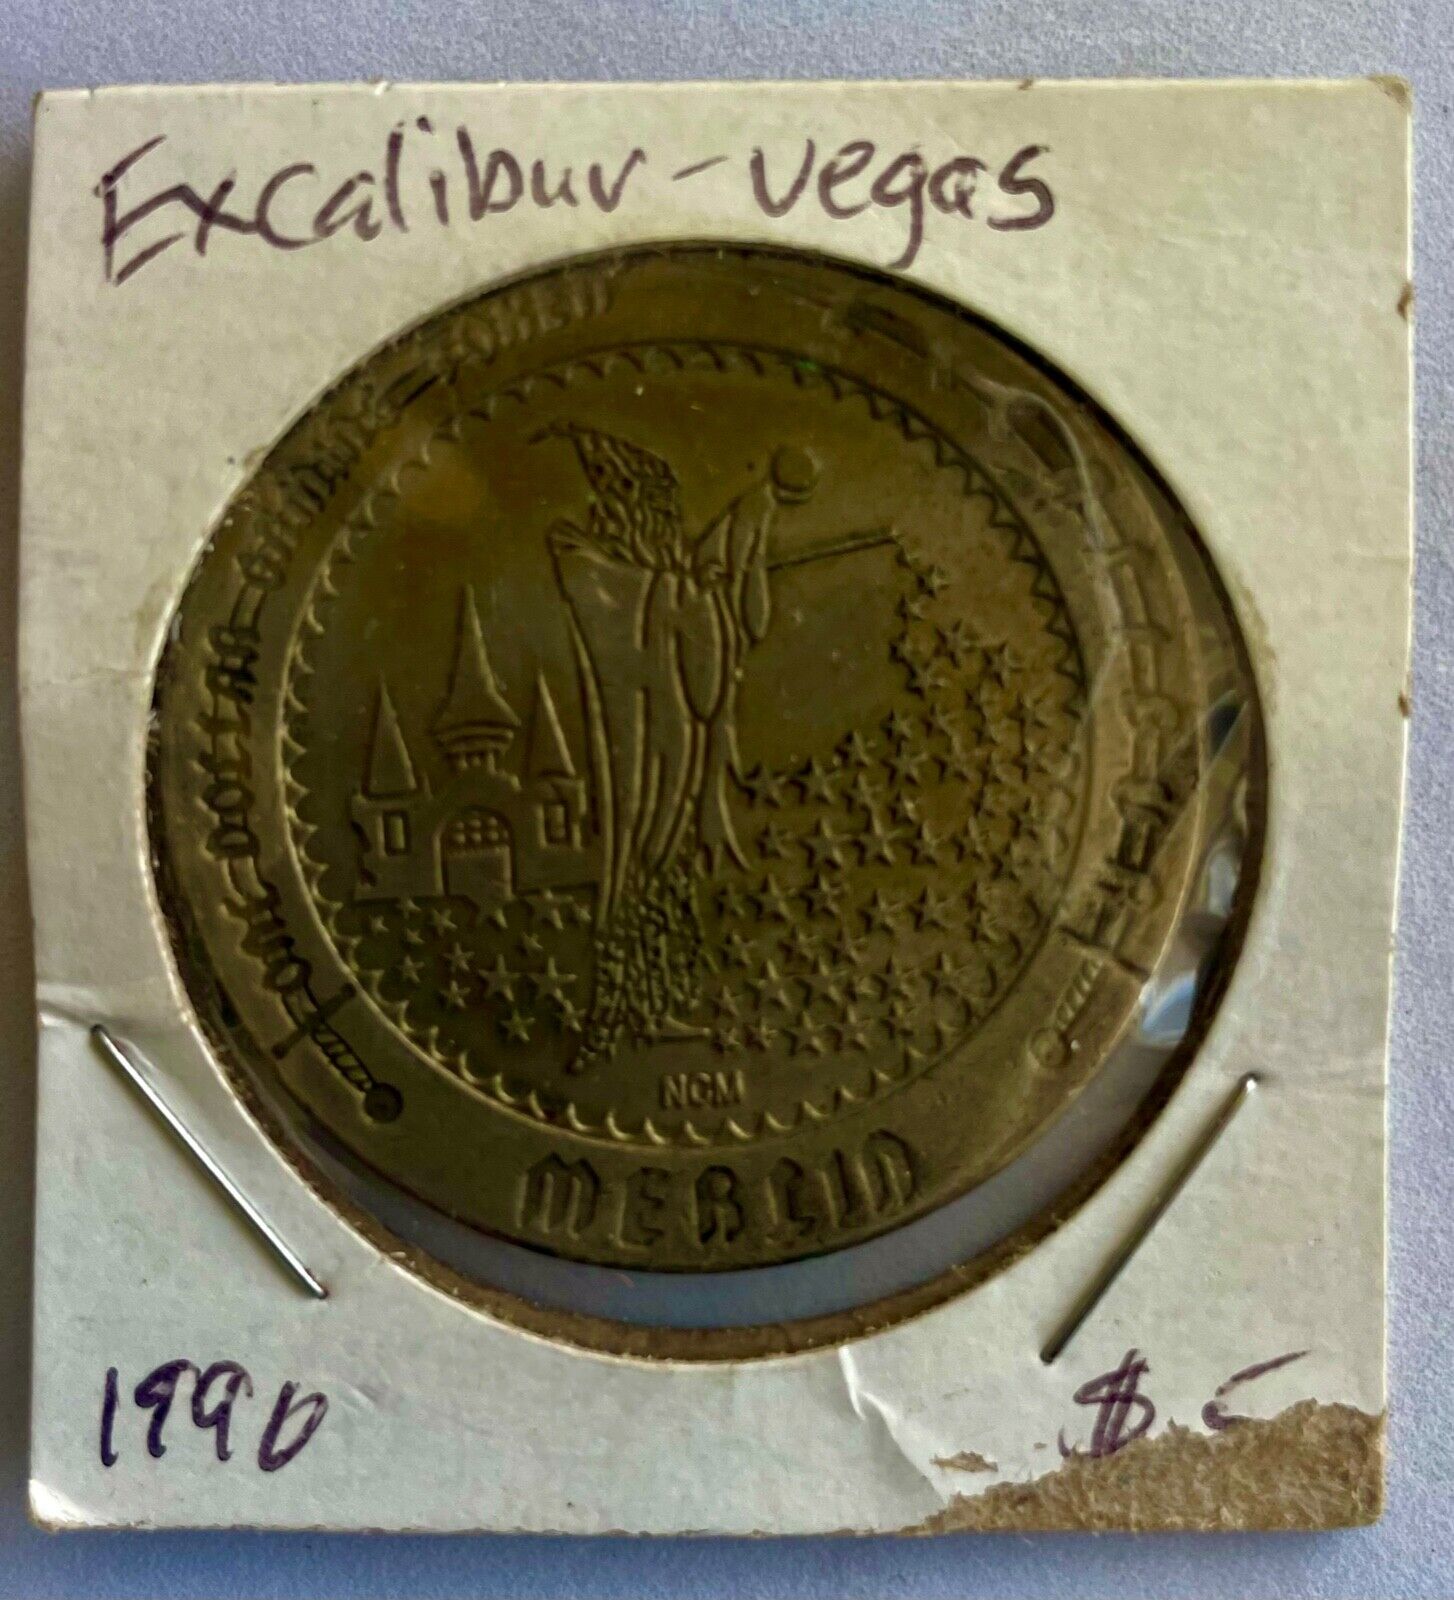 Vintage 1990 - Excalibur (Merlin) Las Vegas NV - $1 Casino Slot Dollar Coin Chip